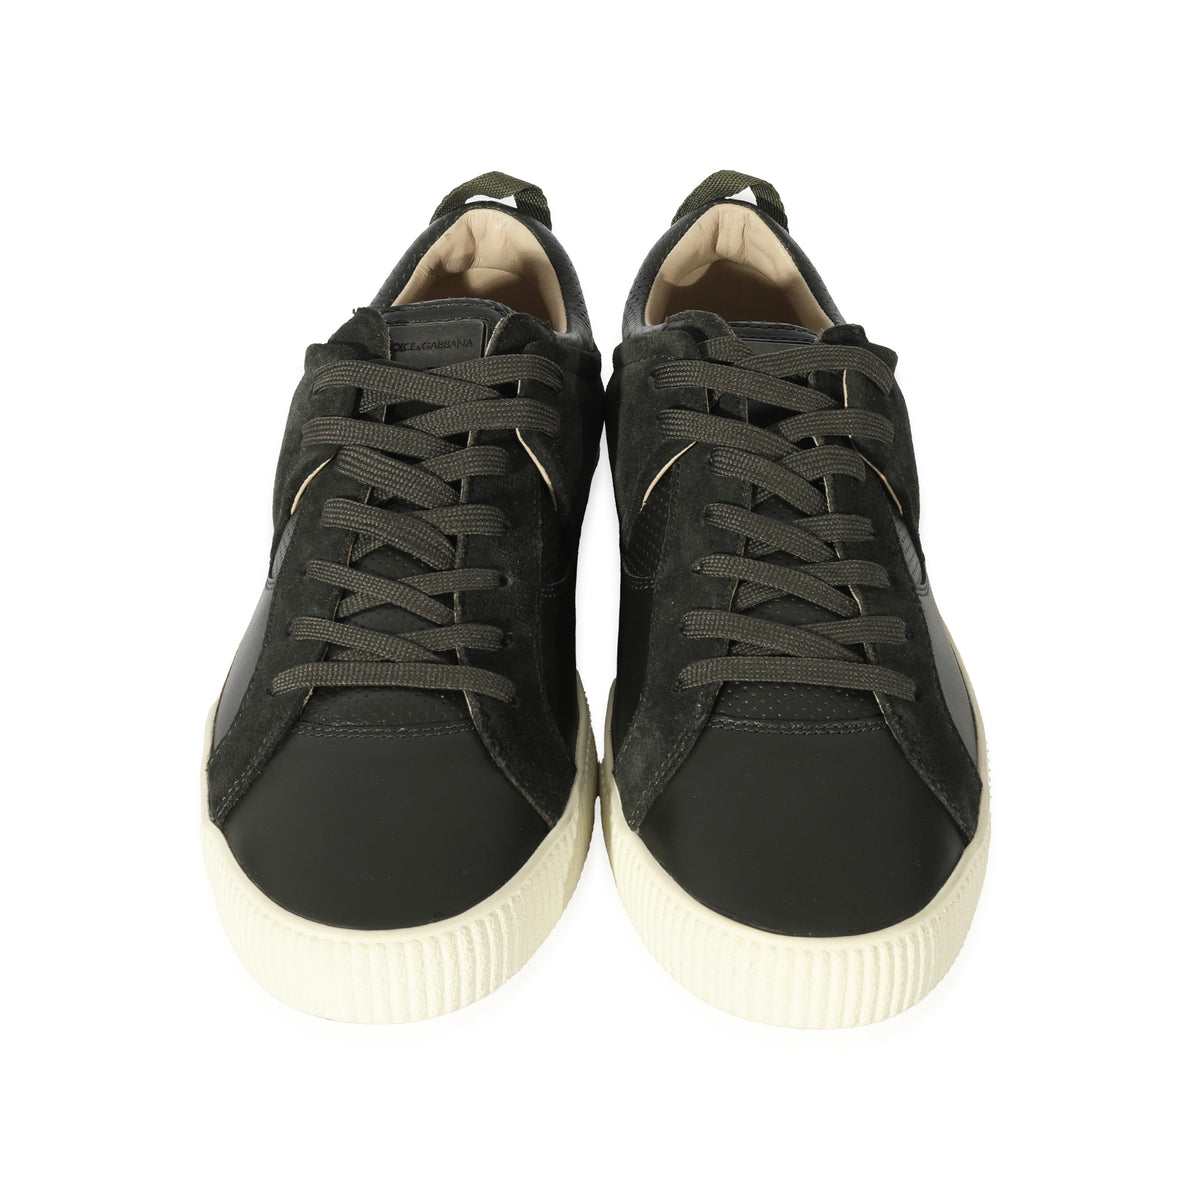 D&G Leather Low Top Sneaker 'Green Tan'